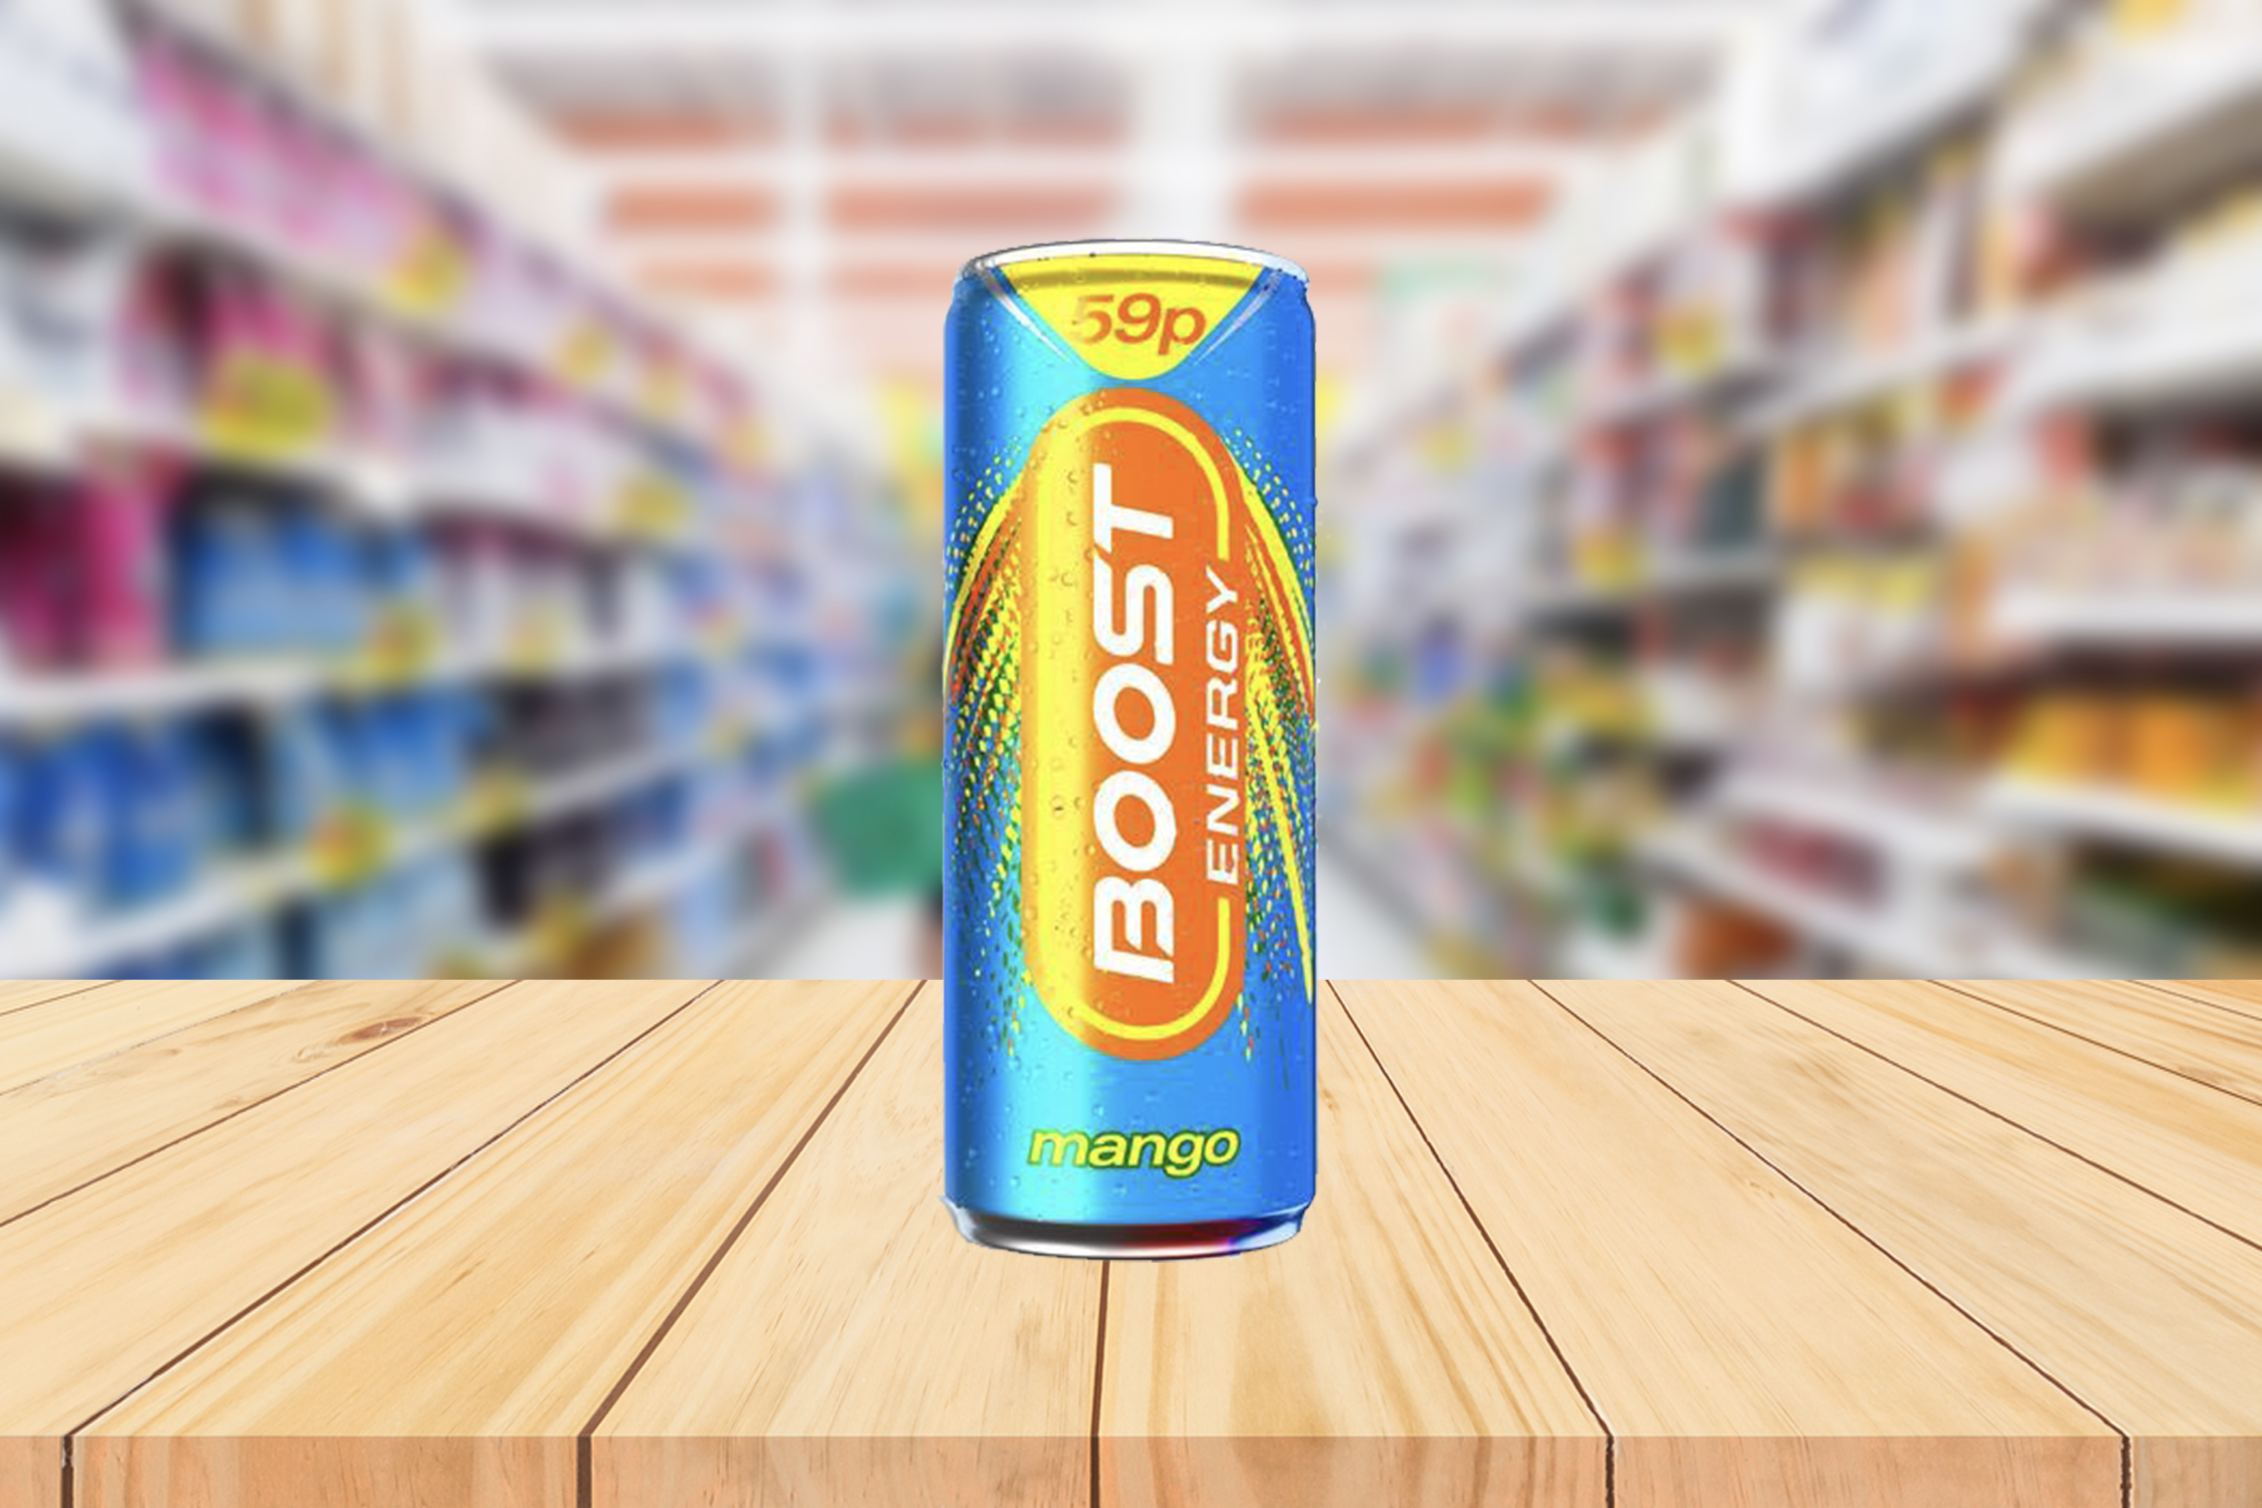 Northern Ireland’s best-selling soft drink brand*  adds Mango to popular Energy range